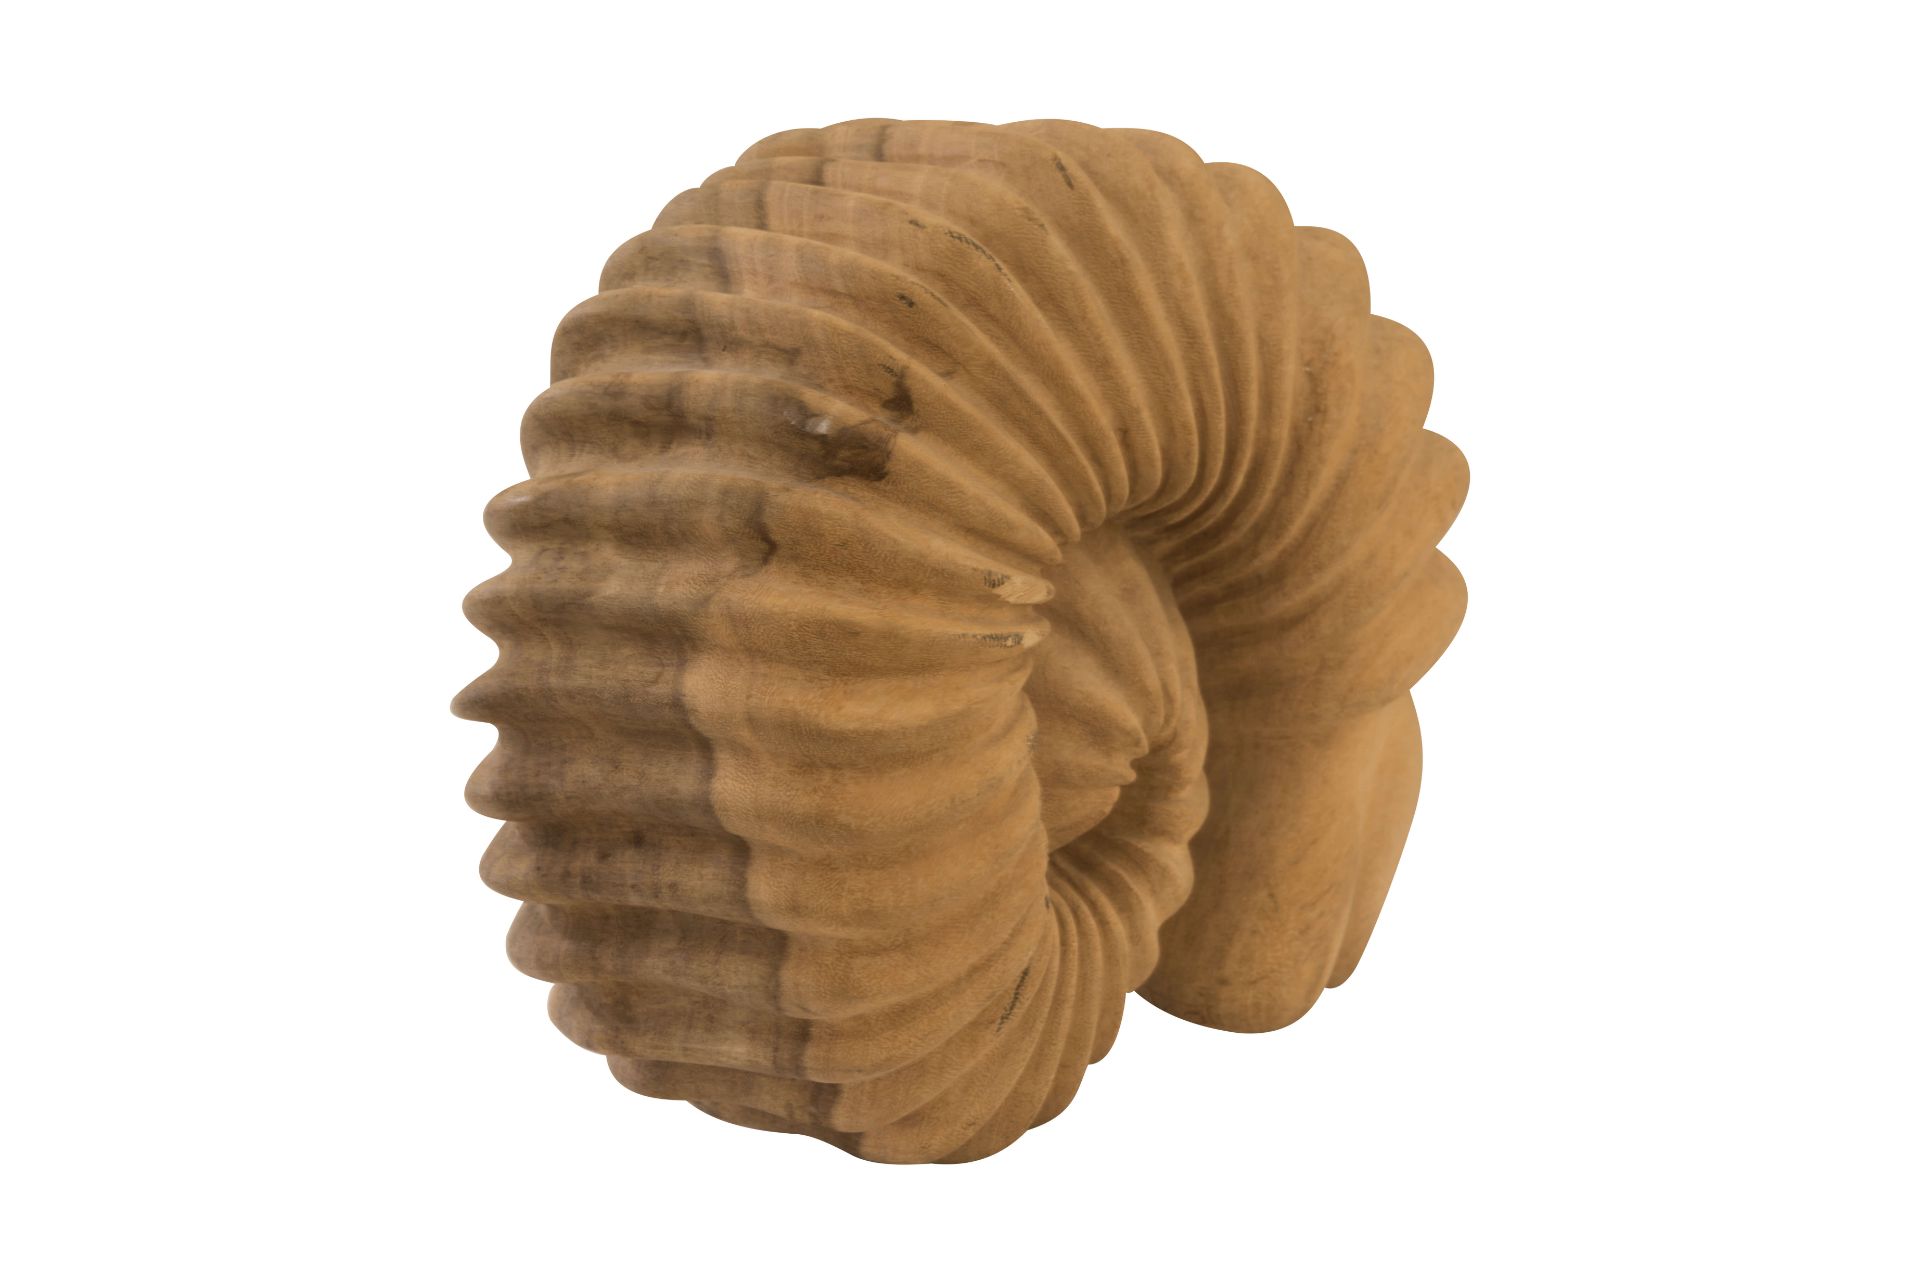 Holzfigur Ammonit | Wooden Figure Ammonite - Image 3 of 5